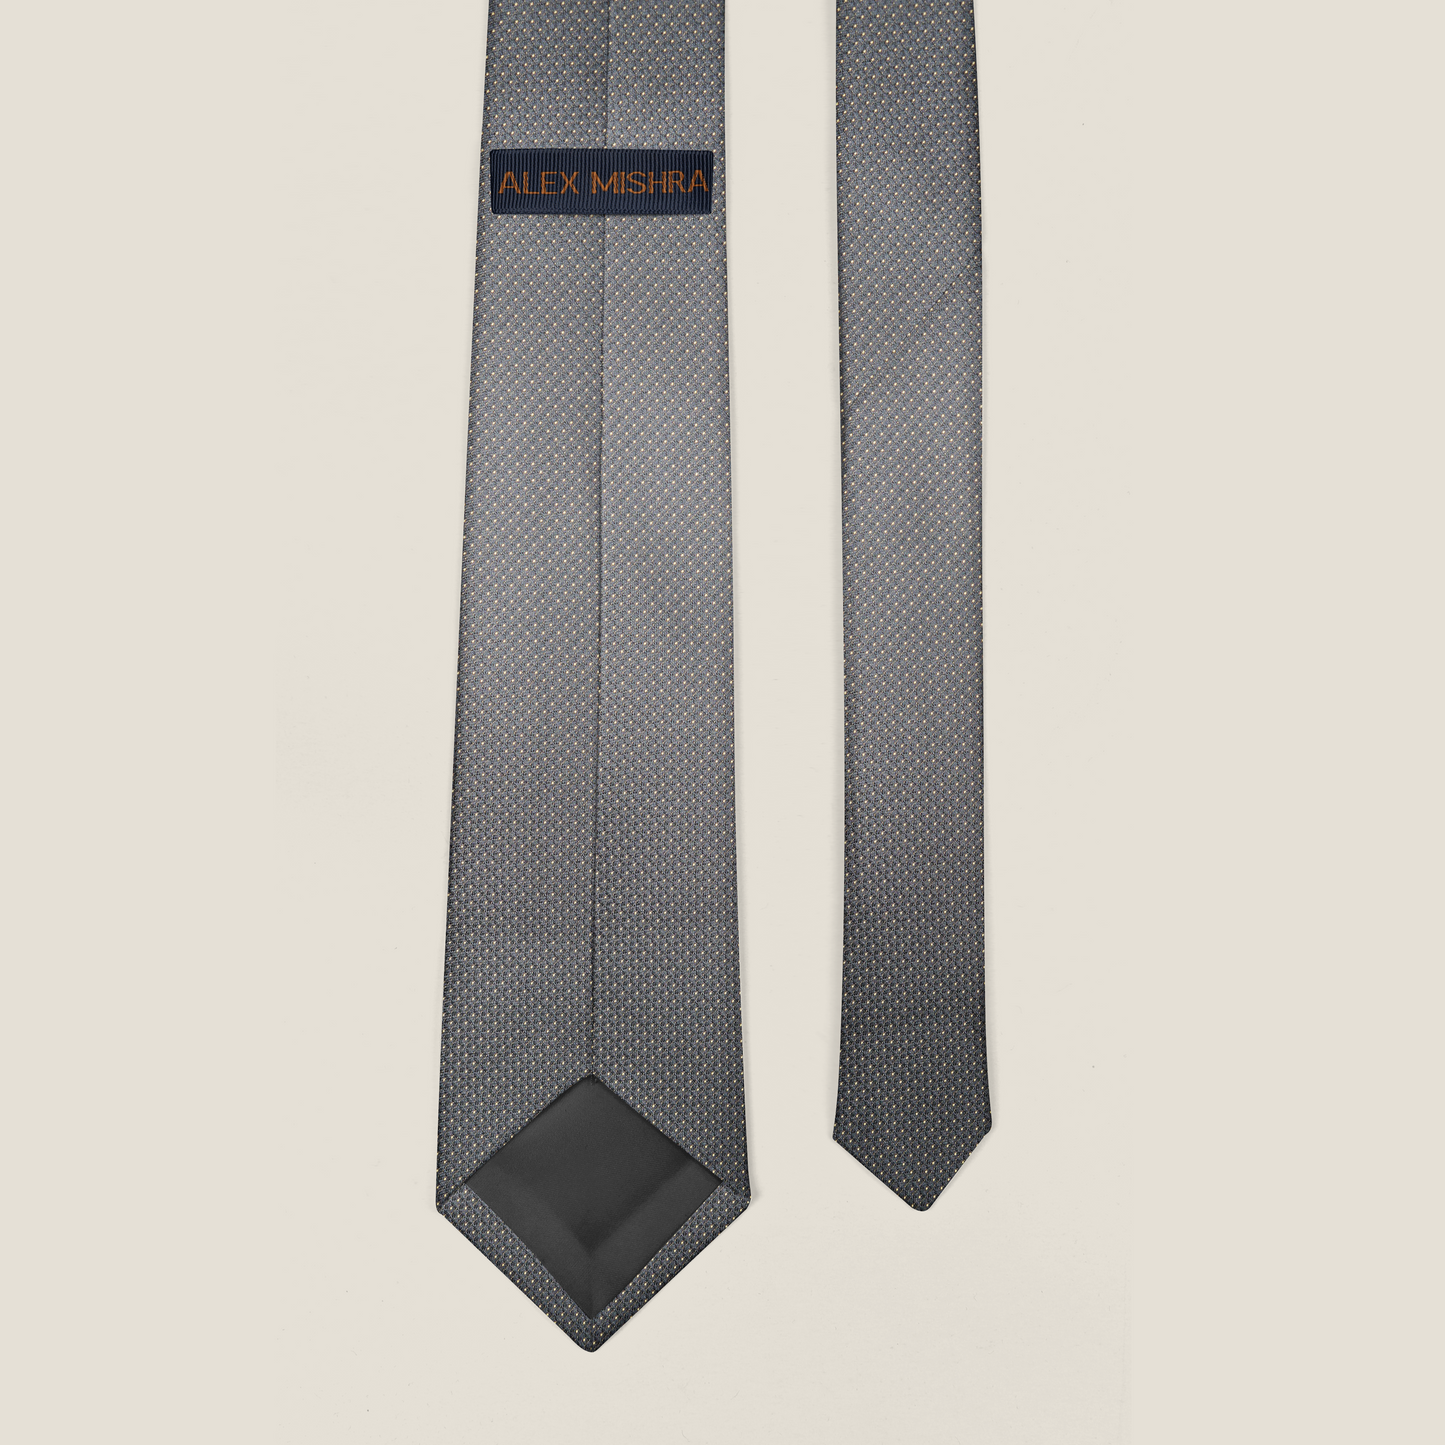 Black Dotted Tie